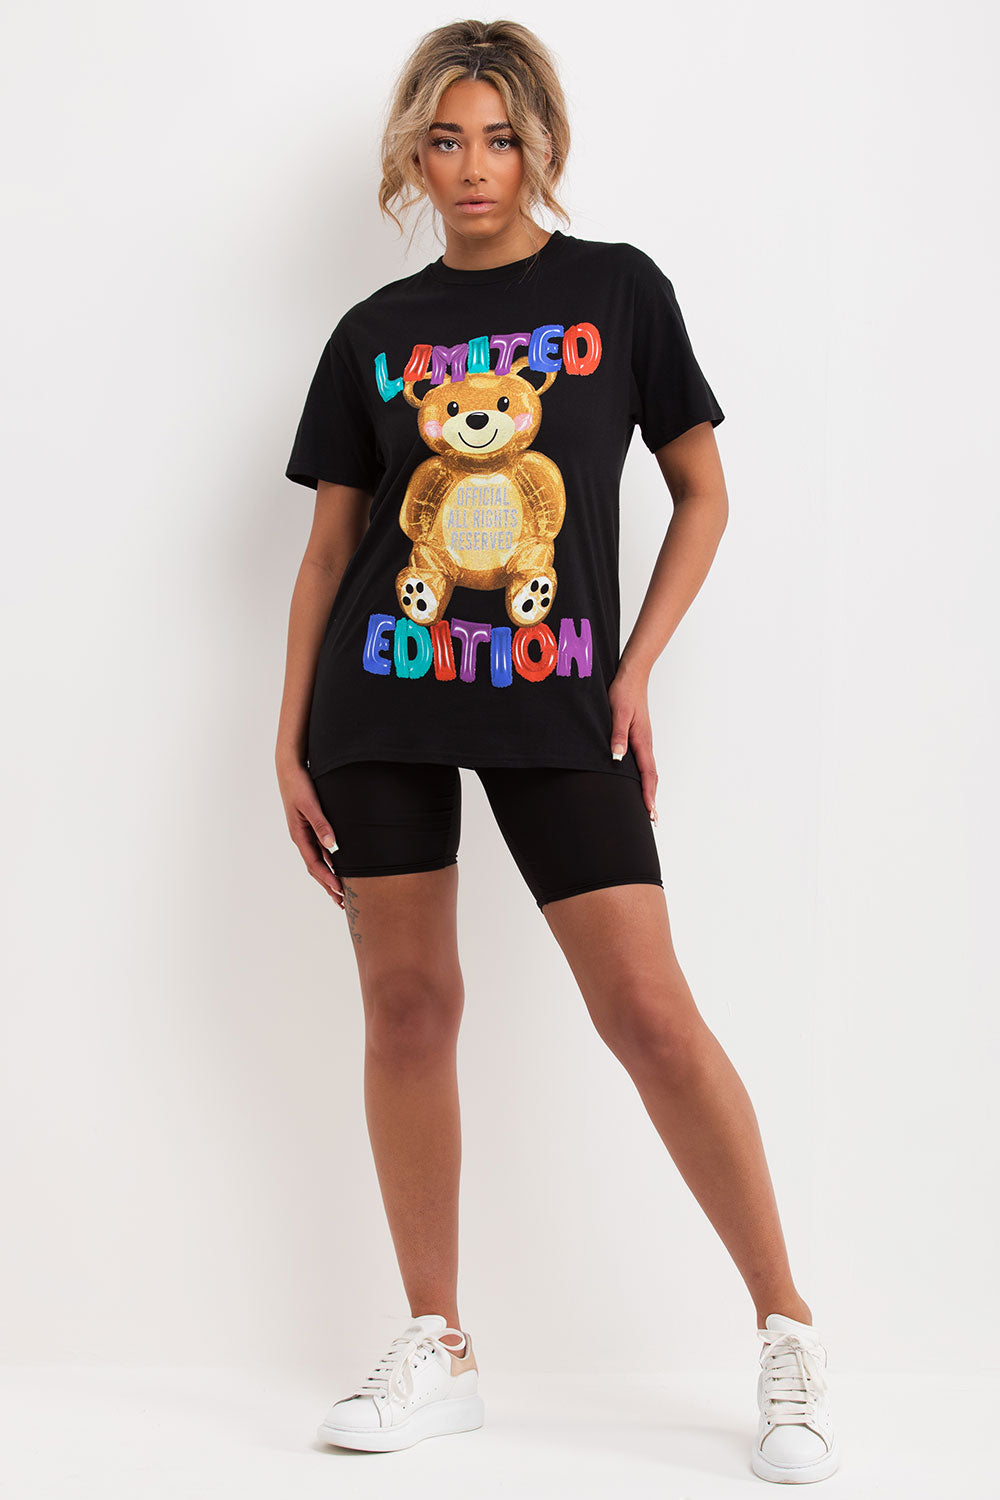 womens teddy bear limited edition t shirt uk